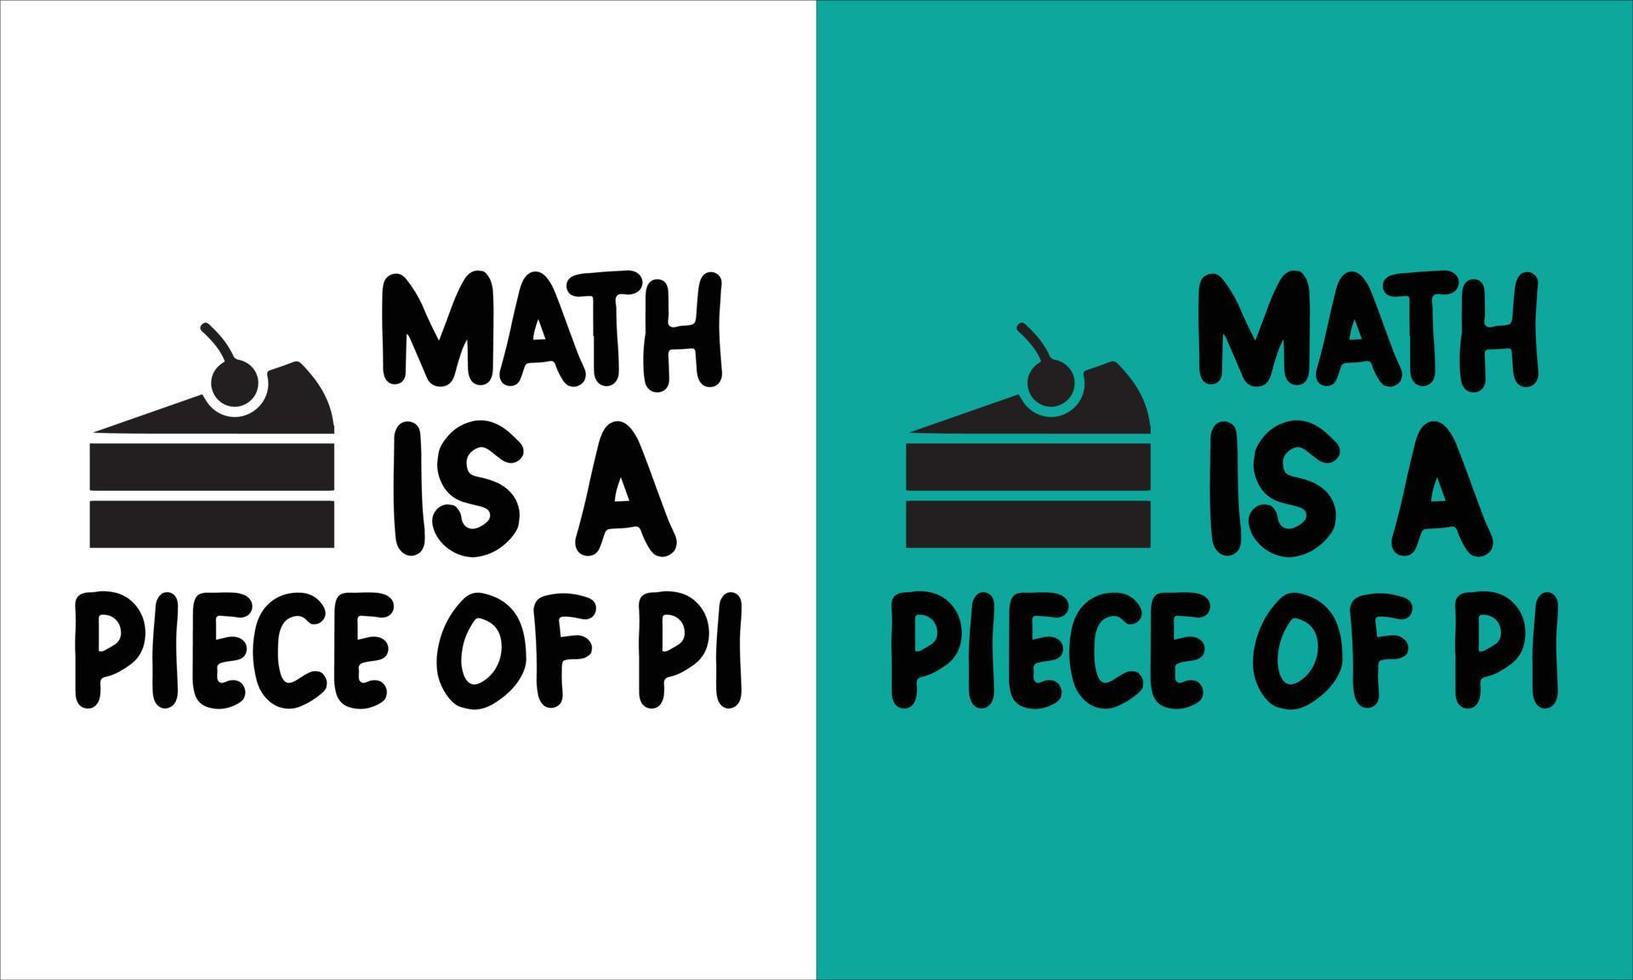 Pi day design,Pi day t-shirt design,Don't be irrational pi design,Happy pi day t-shirt design. vector